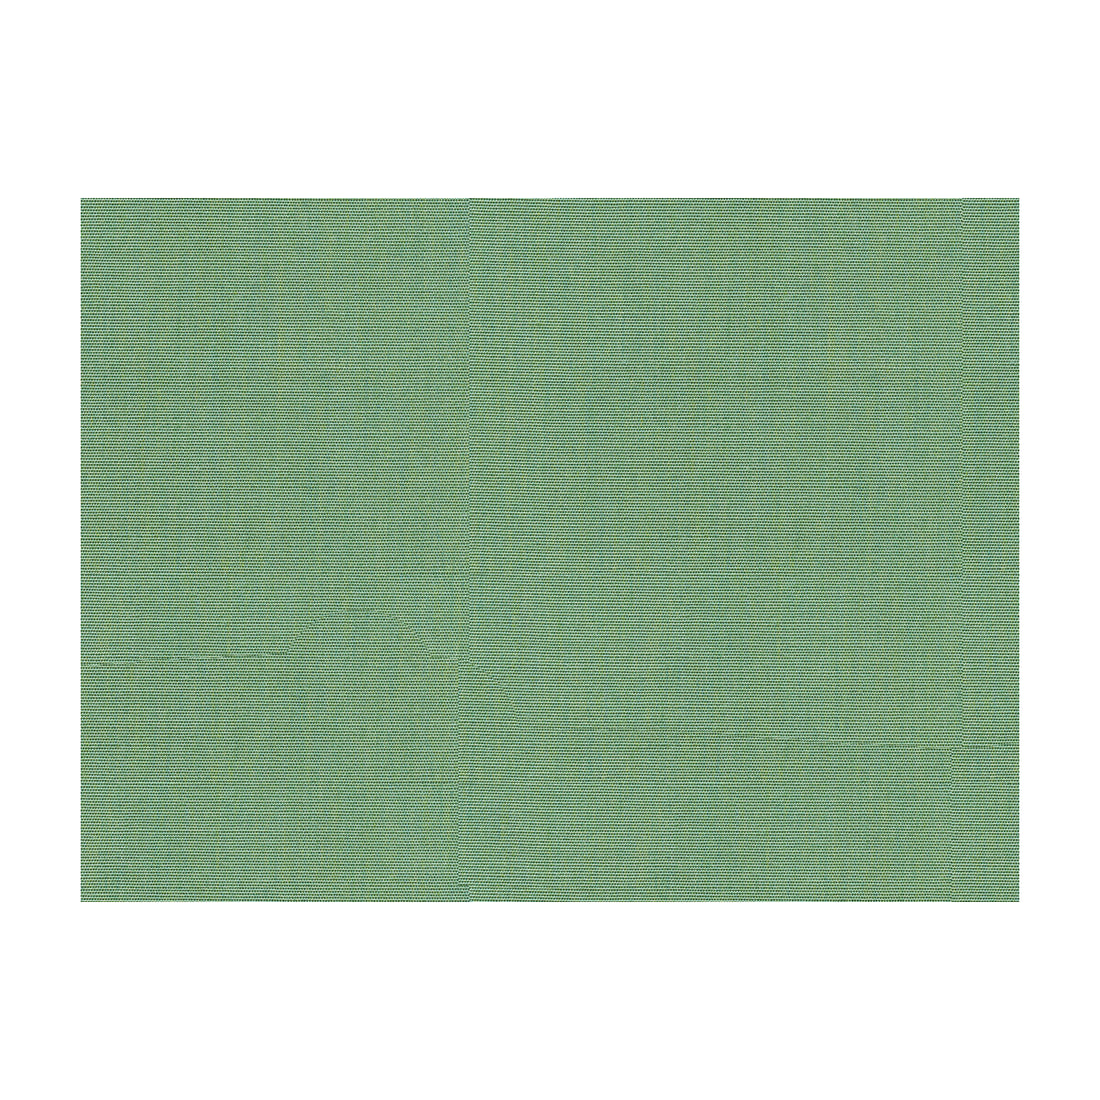 Kravet Smart fabric in 33383-135 color - pattern 33383.135.0 - by Kravet Smart in the Soleil collection